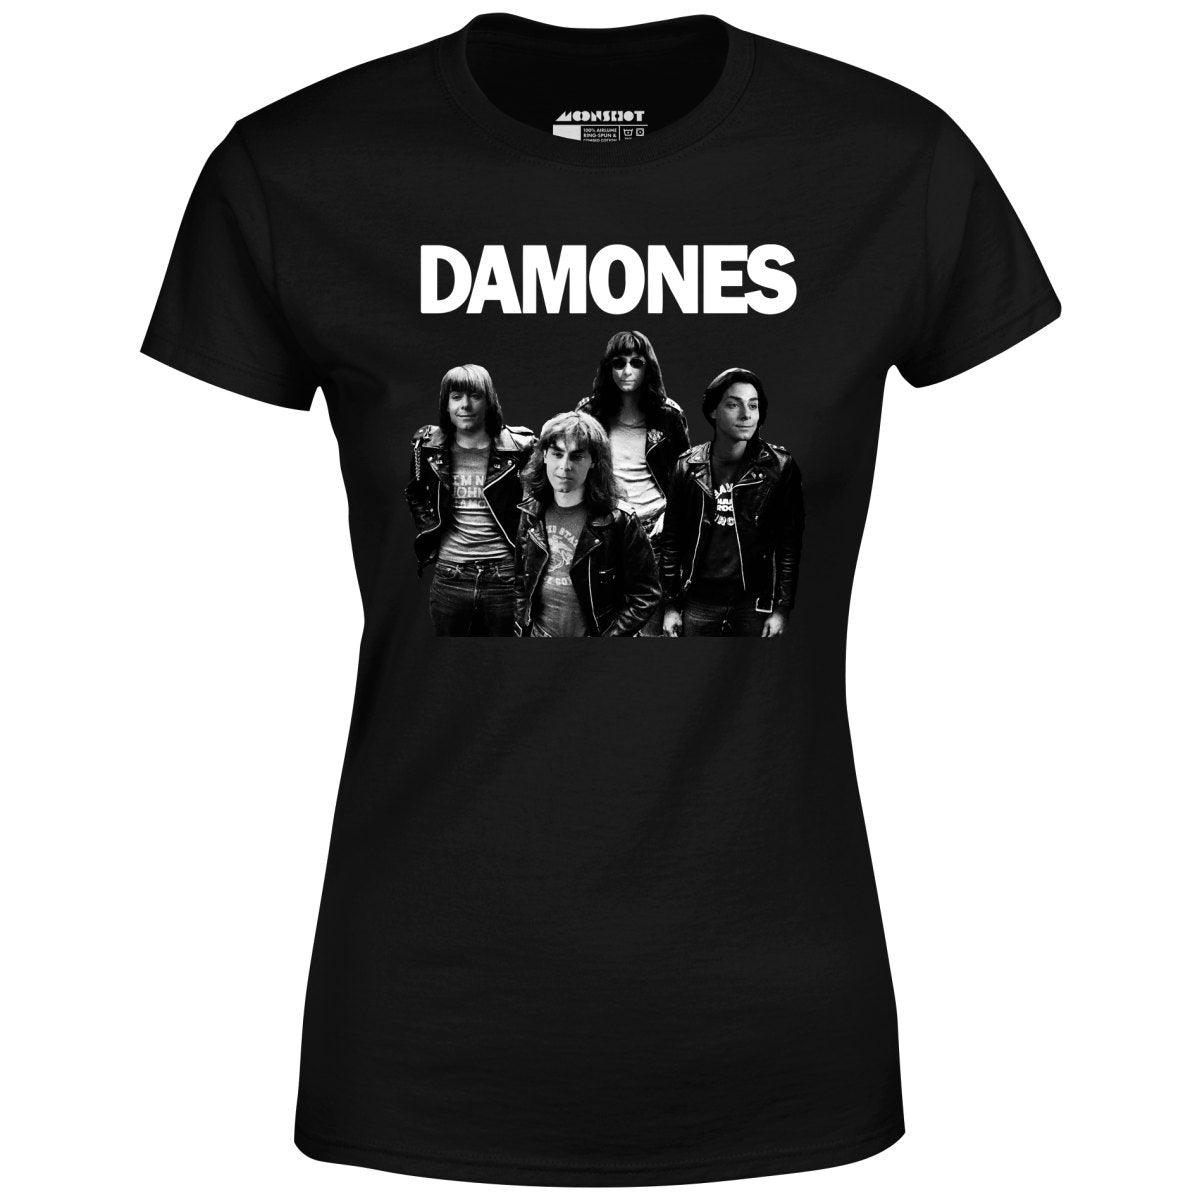 Damones - Women's T-Shirt